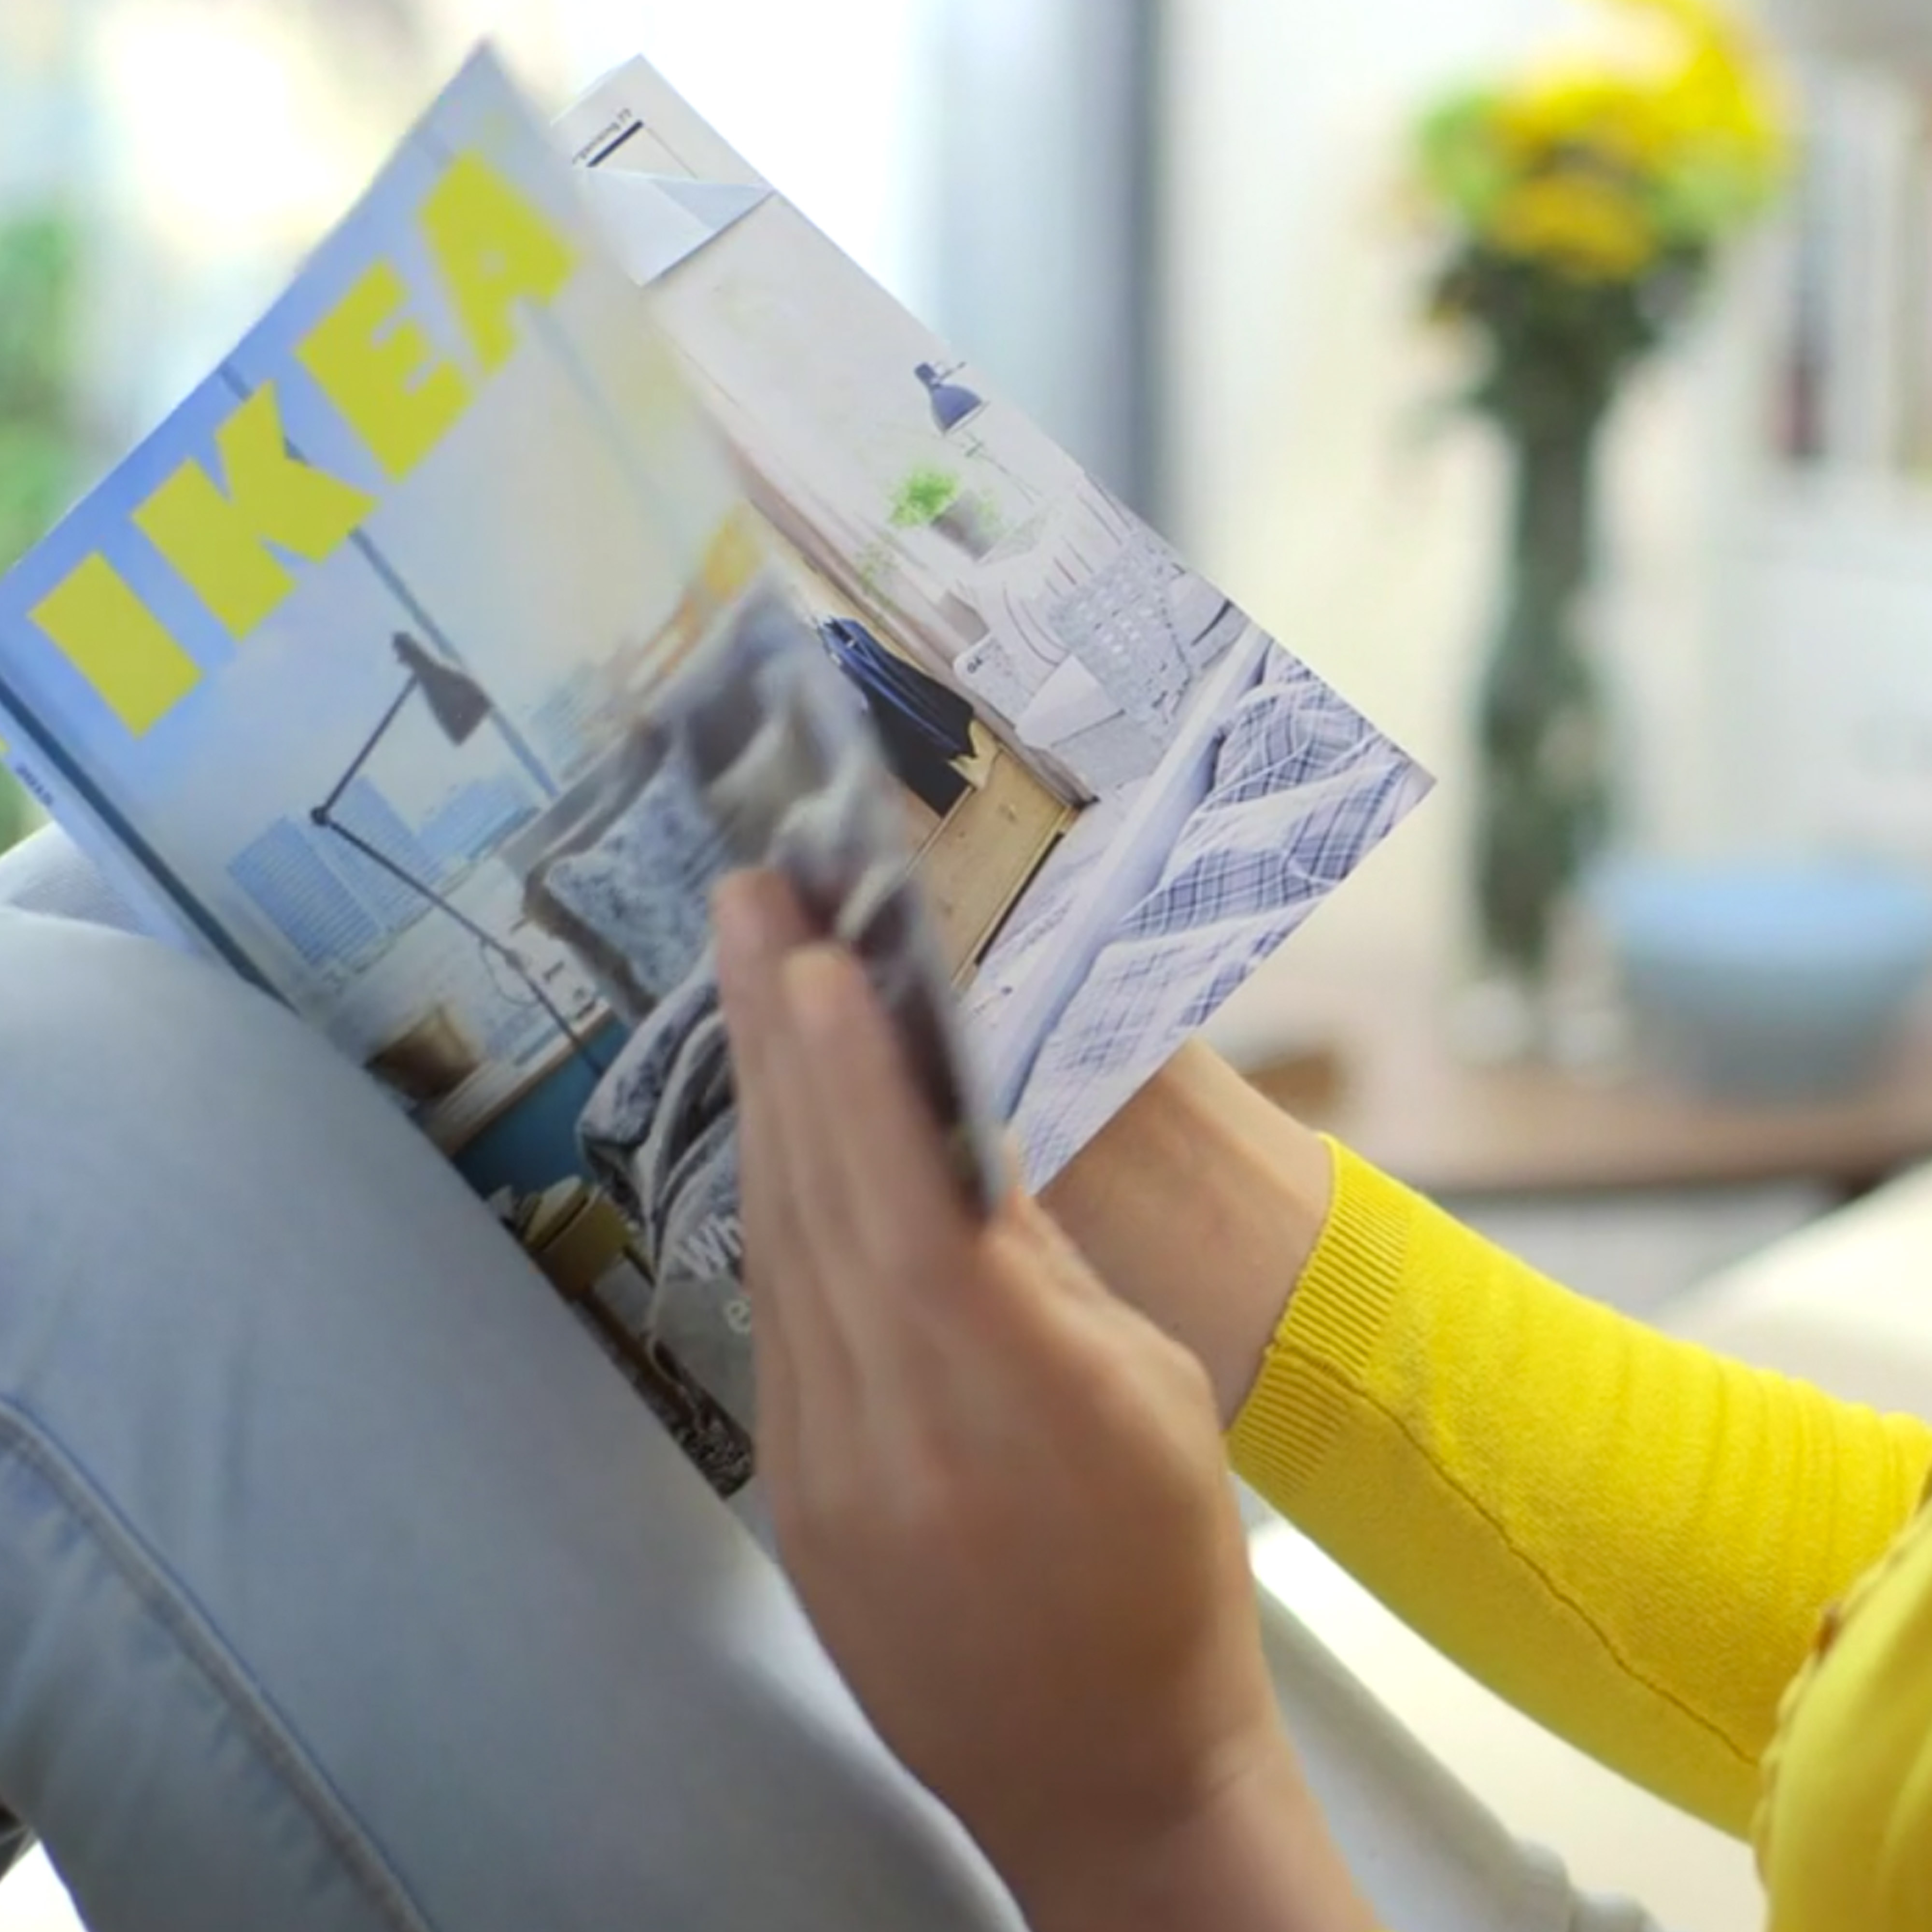 IKEA 2015 Catalogue Experience The “Book” Book